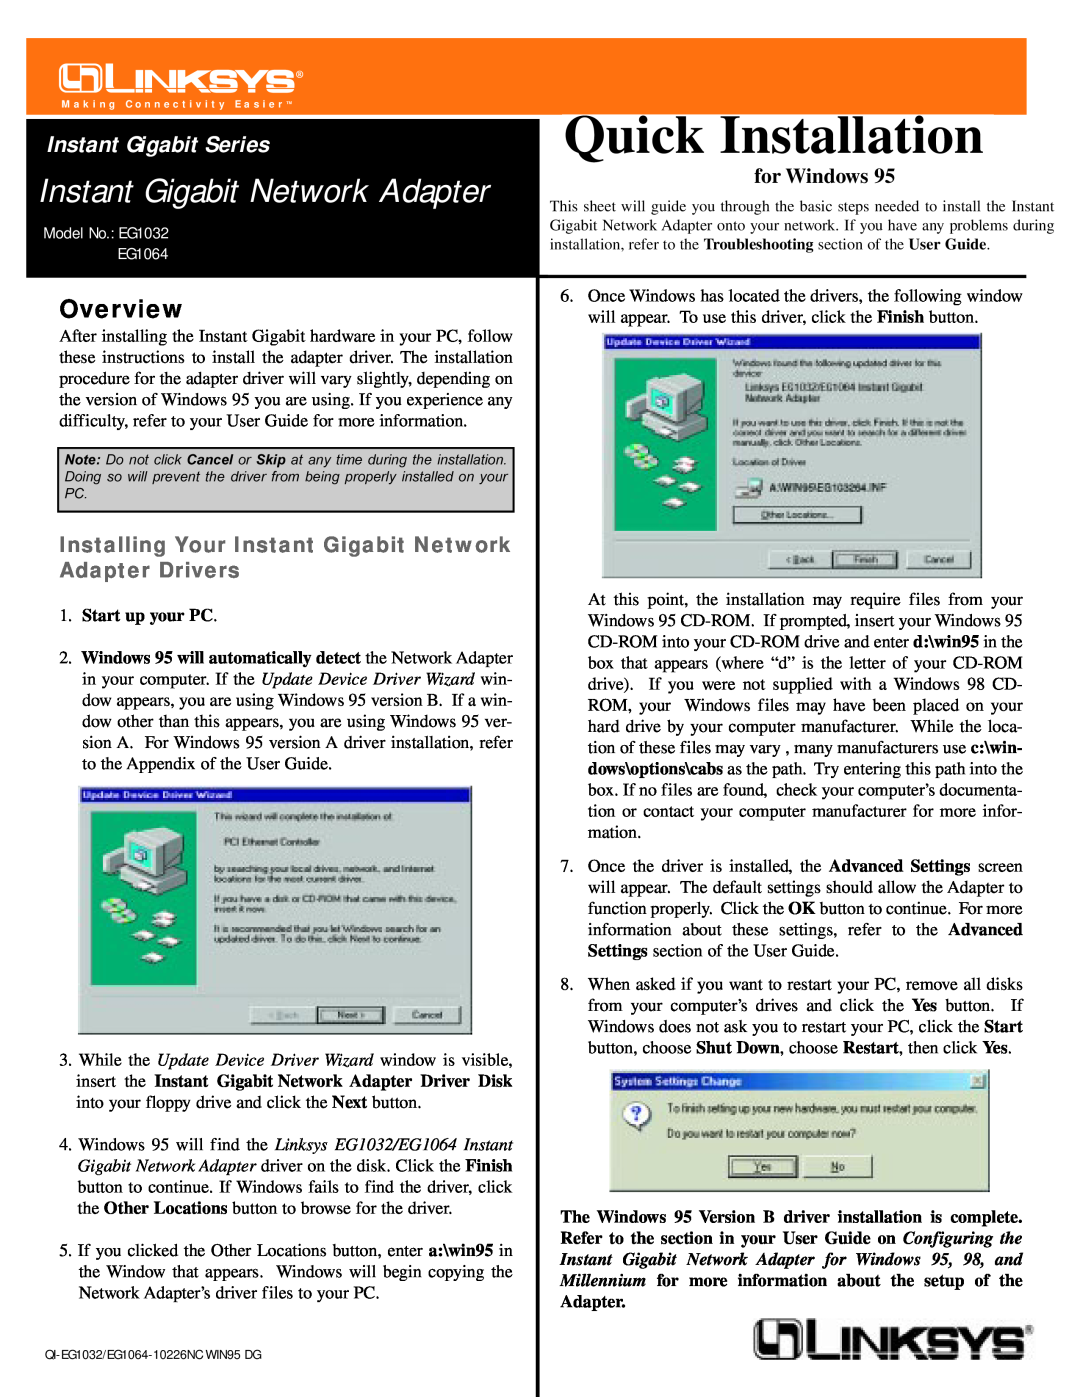 Linksys EG1064 appendix Quick Installation, Instant Gigabit Network Adapter, Instant Gigabit Series, Overview, for Windows 